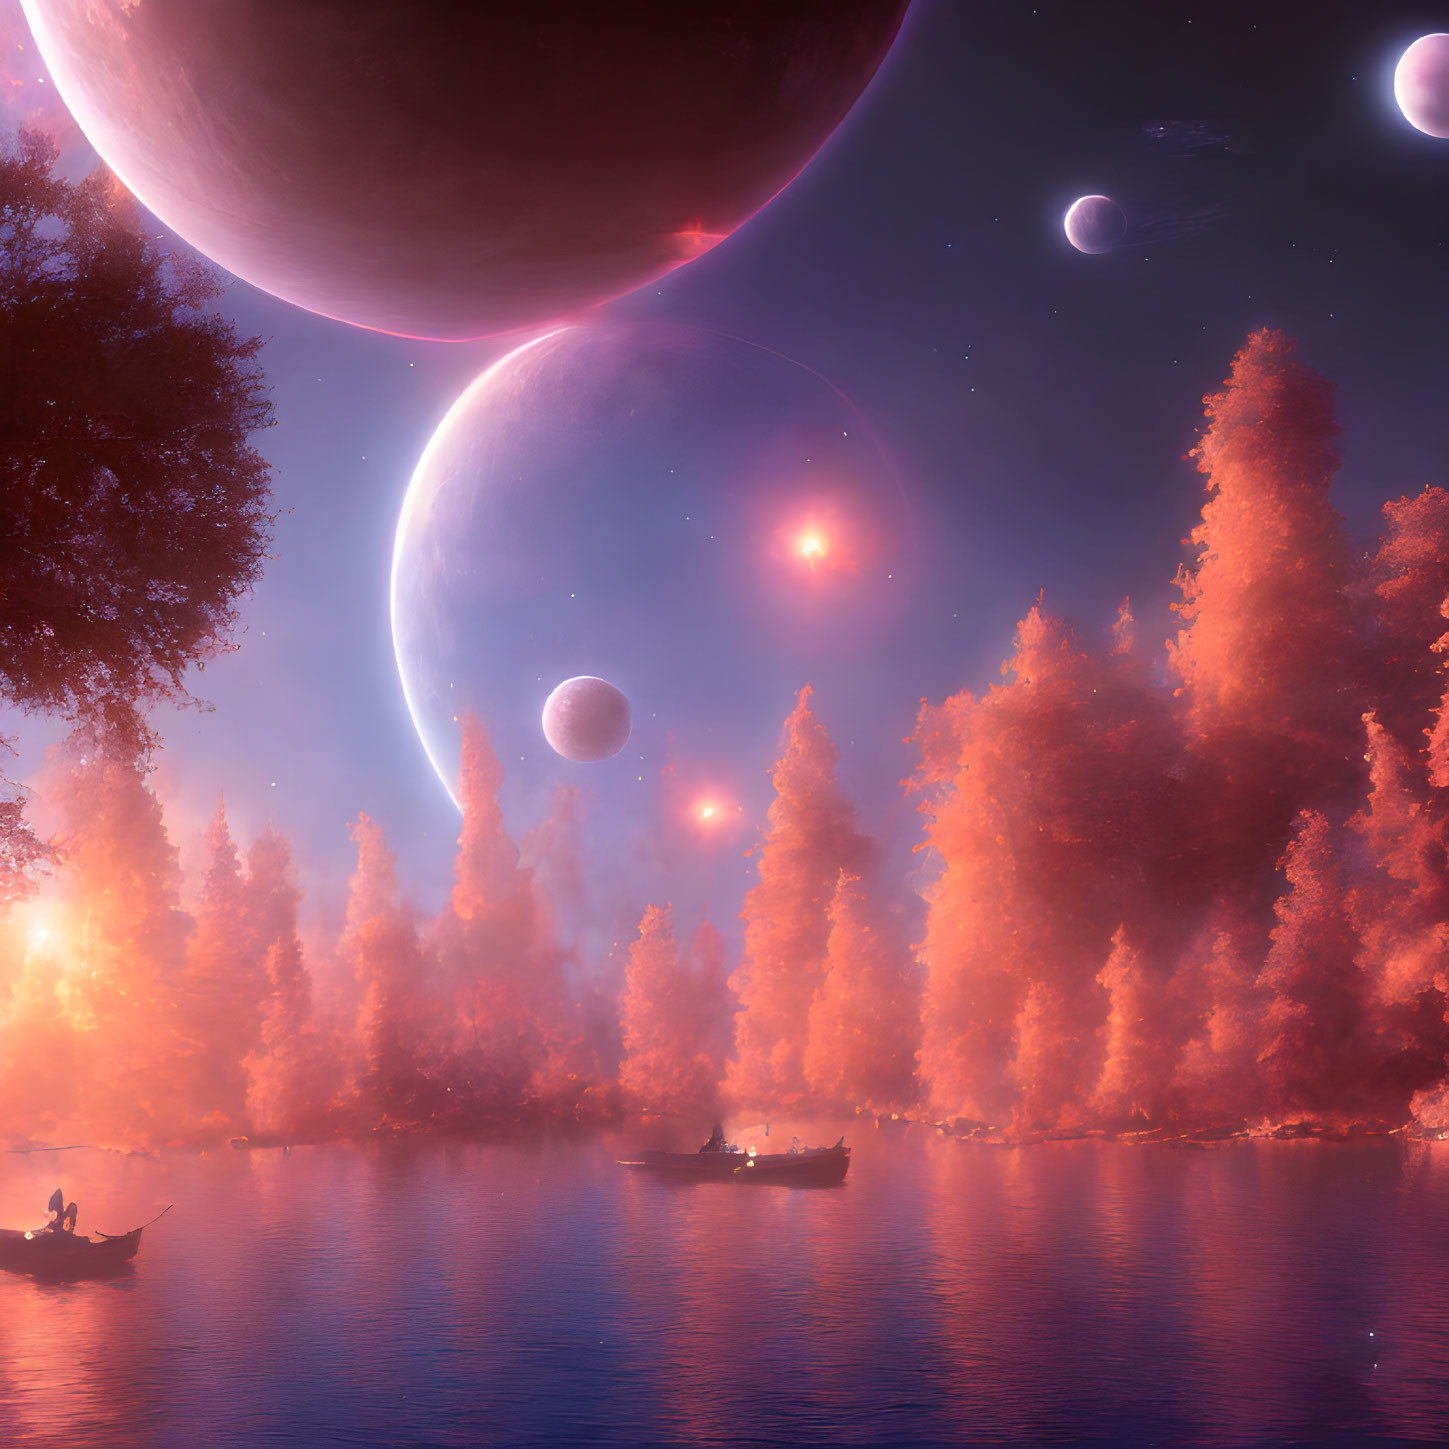 Digital artwork of serene lake with orange trees, surreal sky, moons, and nebula.